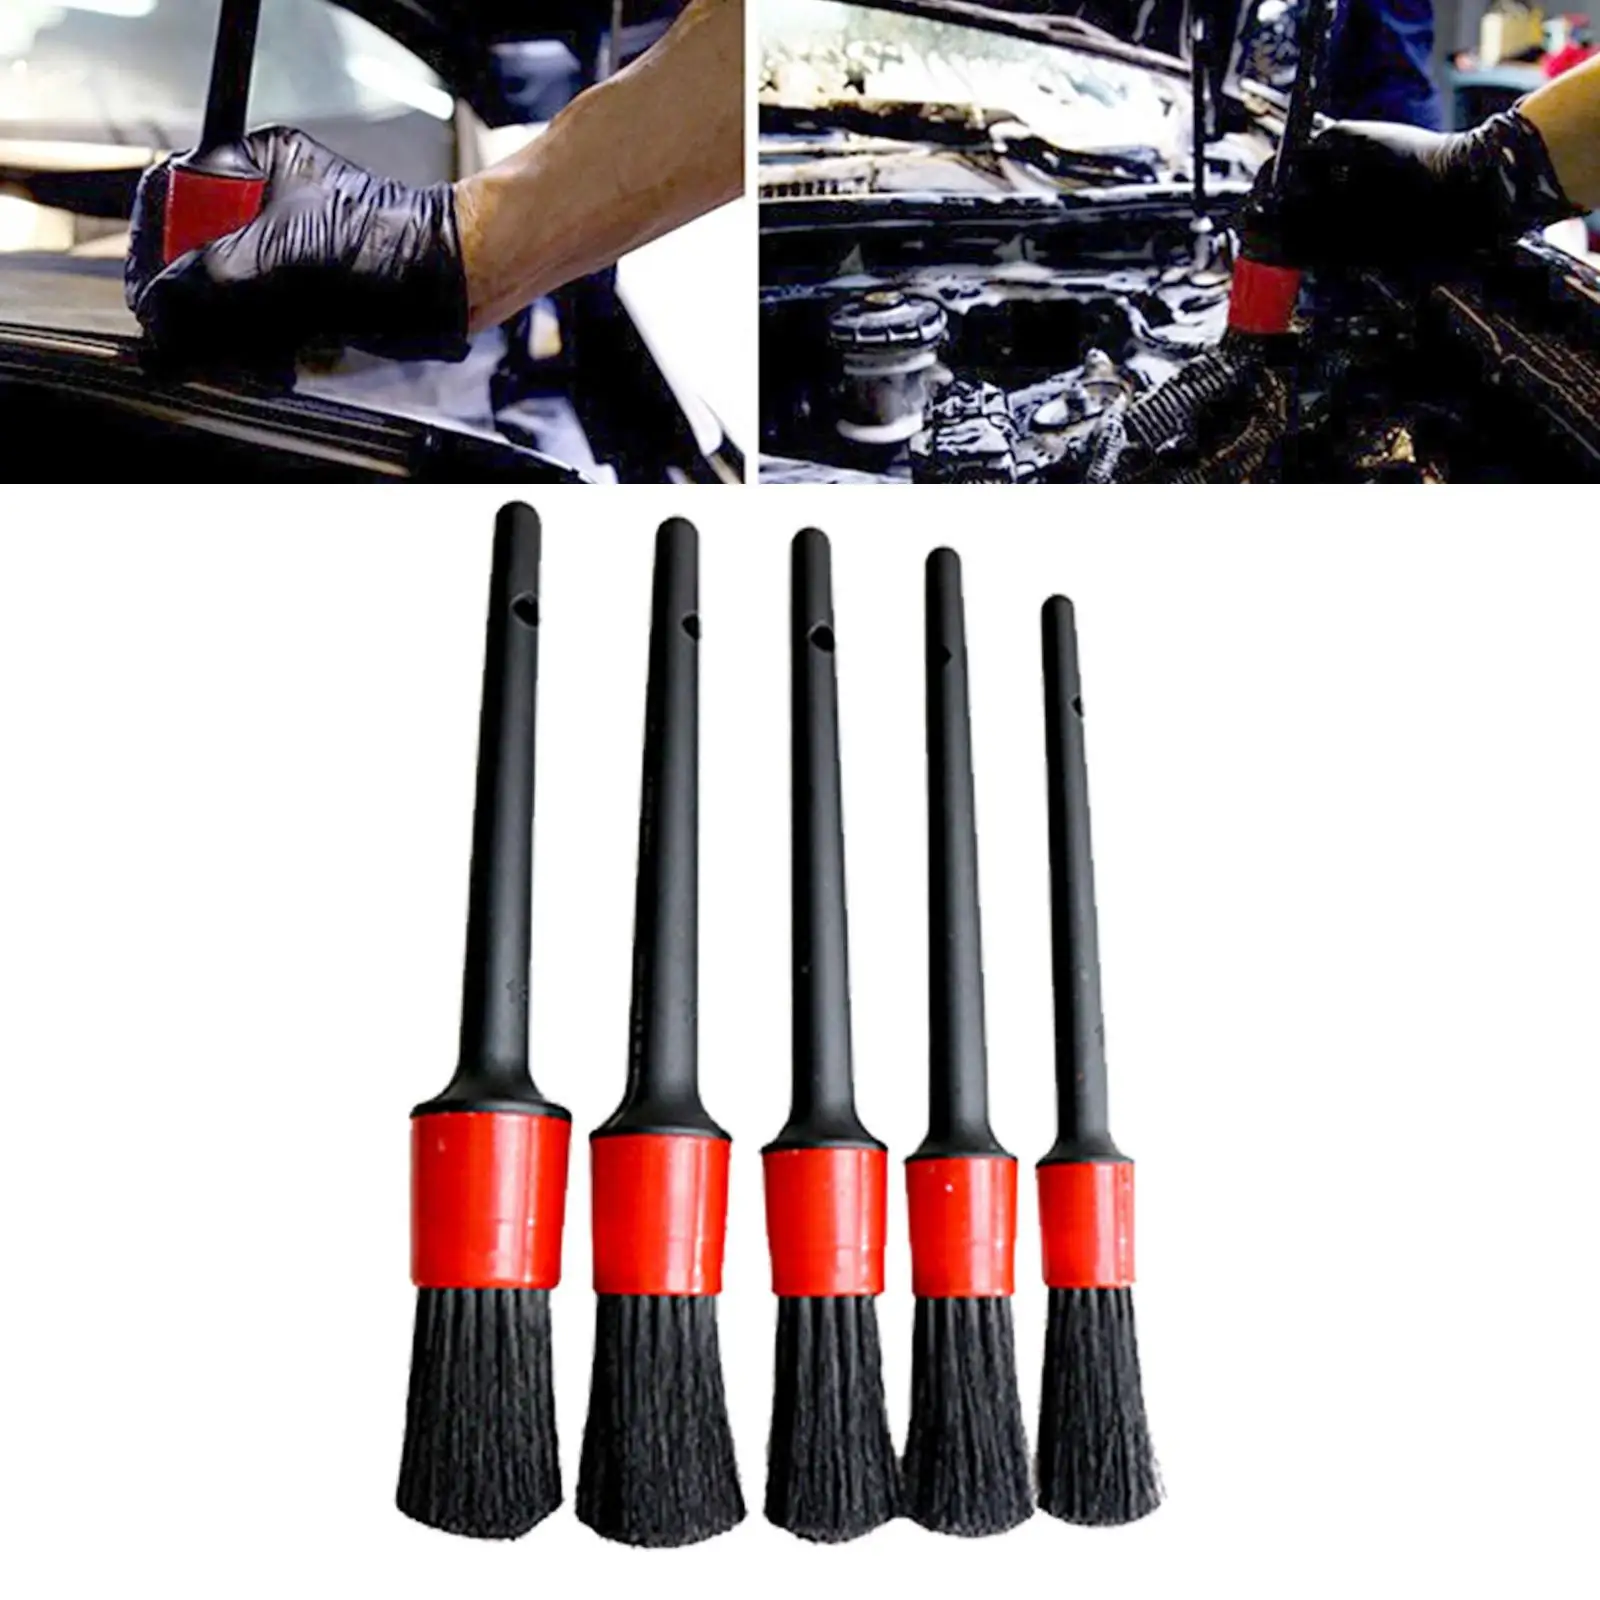 7 Automotive Detail Brushes Interior Detailing Brush Set Handle